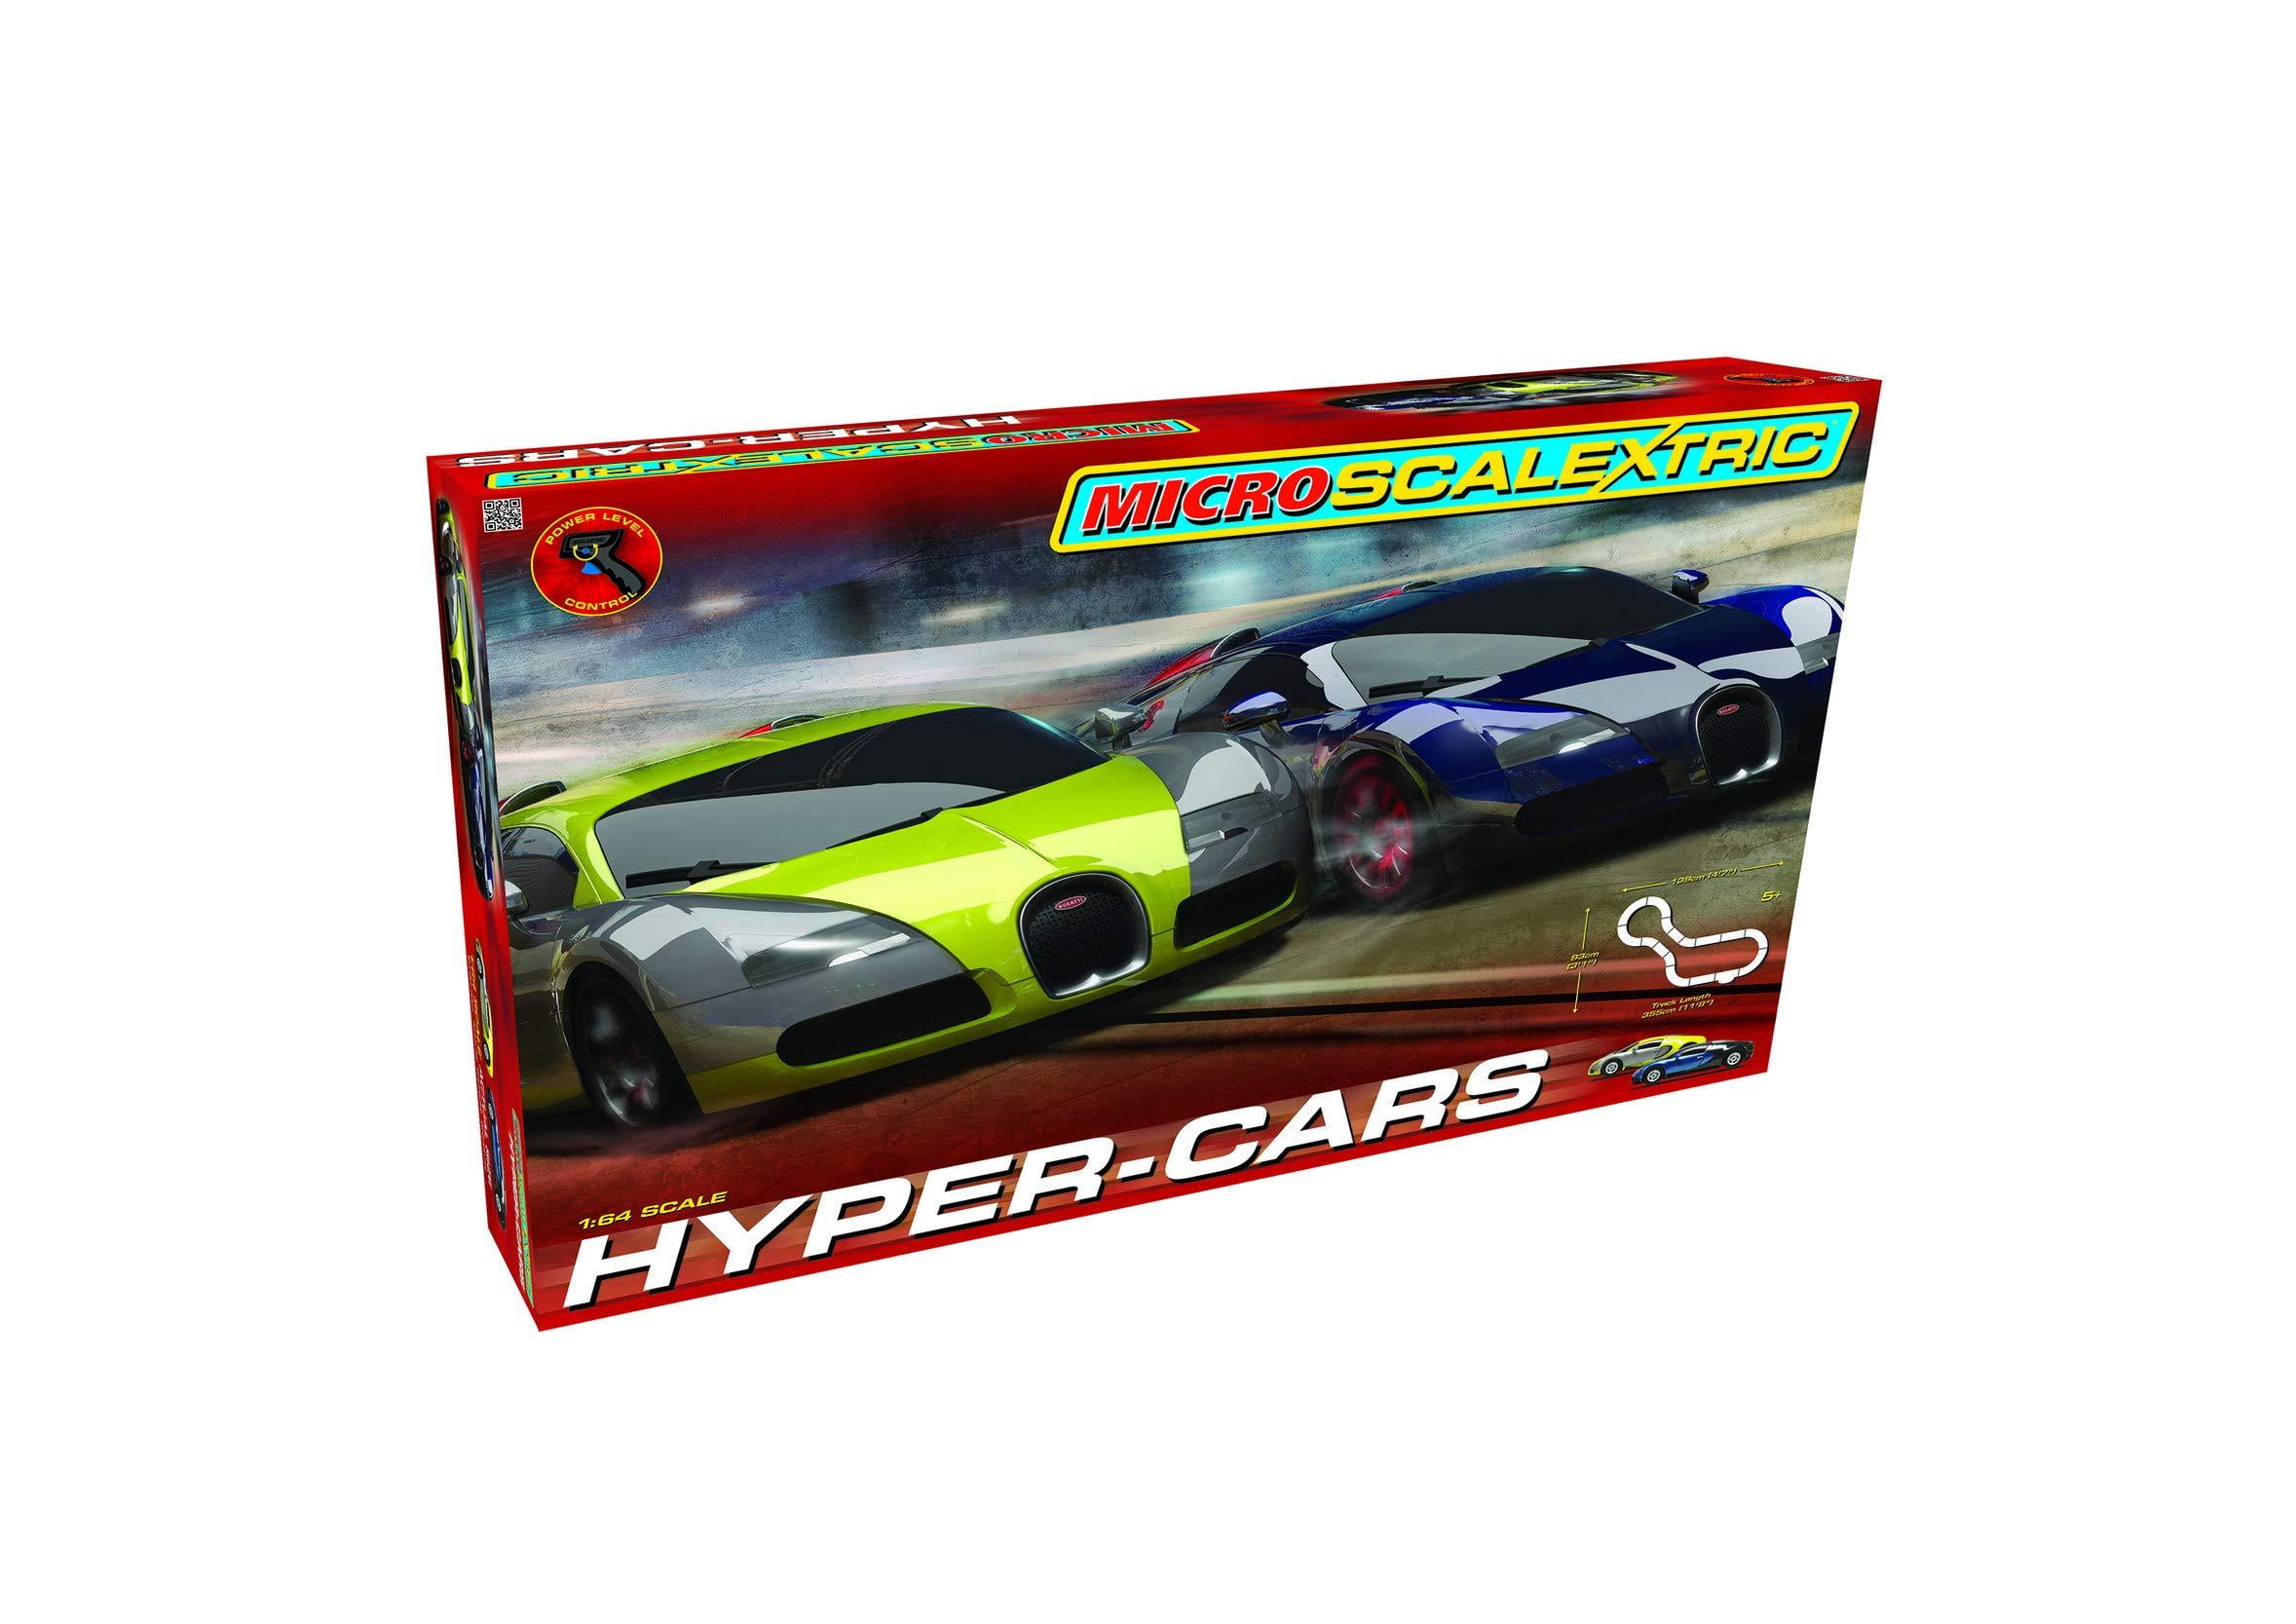 Micro Hyper Cars 1:64 Slot Car Race Track